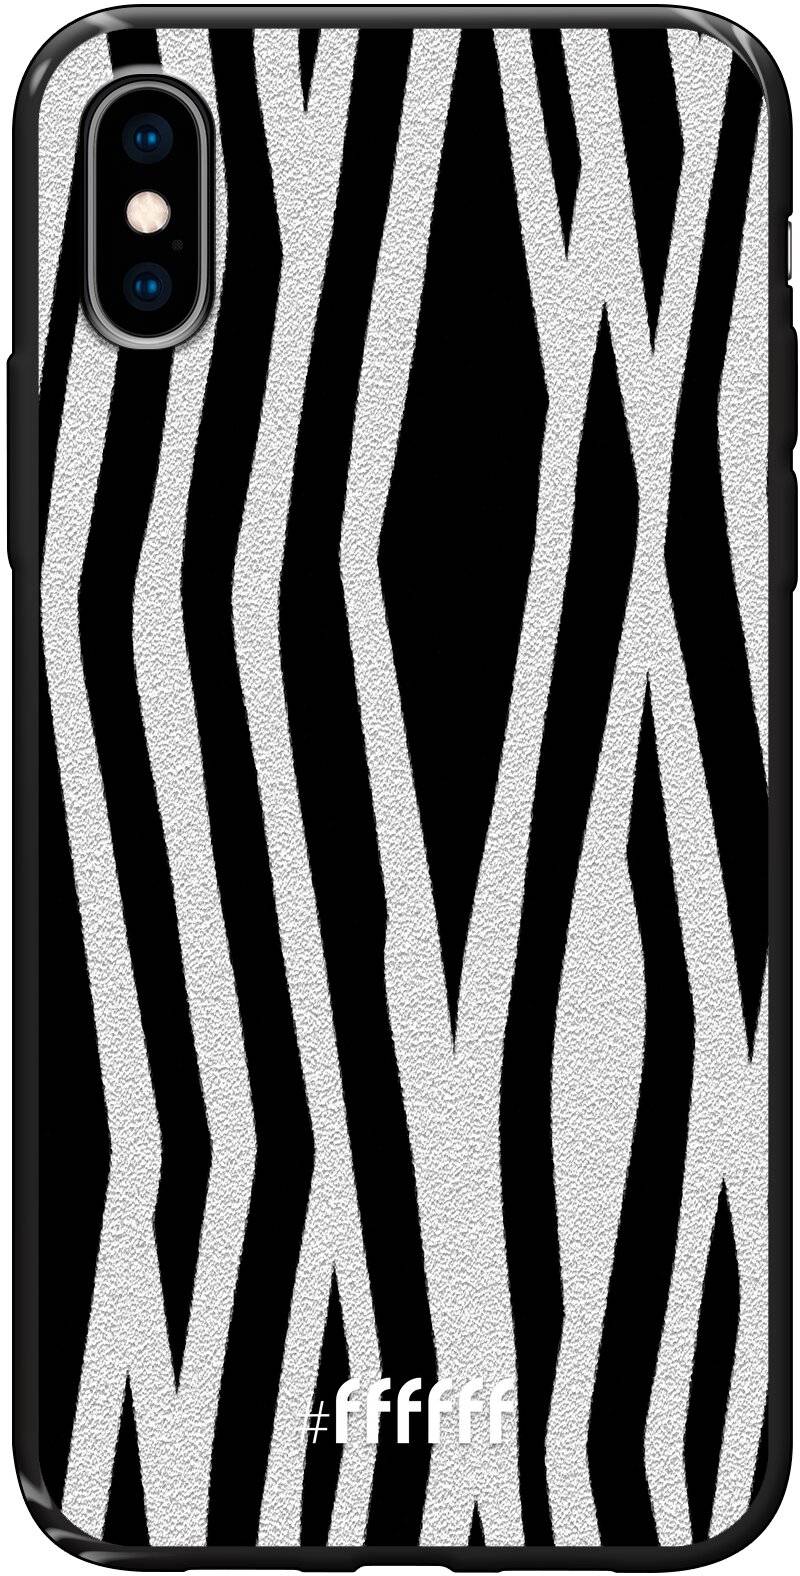 Zebra Print iPhone X